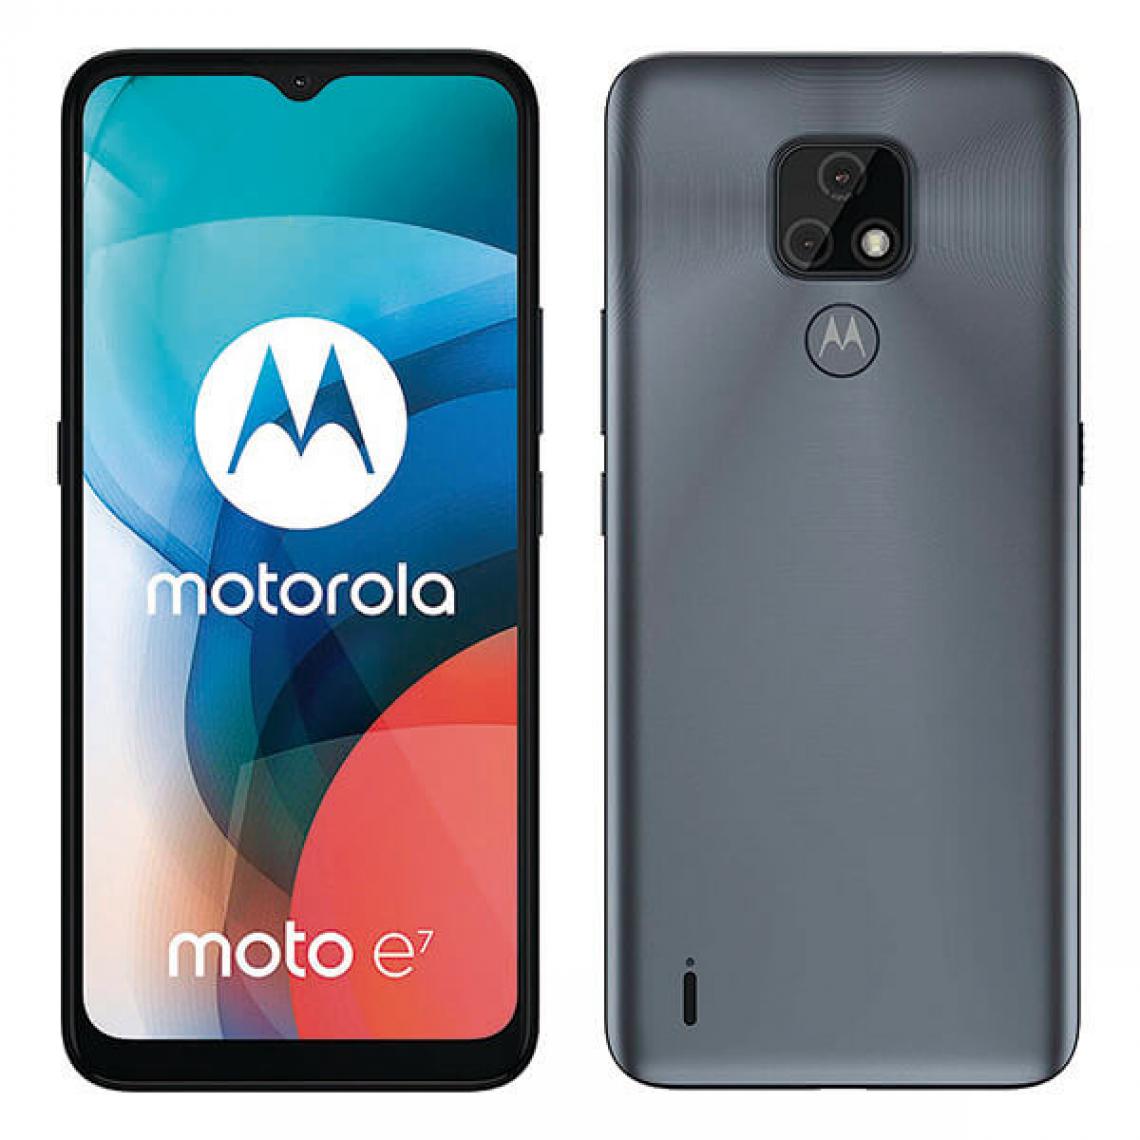 Motorola - Motorola Moto E7 2Go/32Go Gris (Mineral Gray) Dual Sim MC376 - Smartphone Android